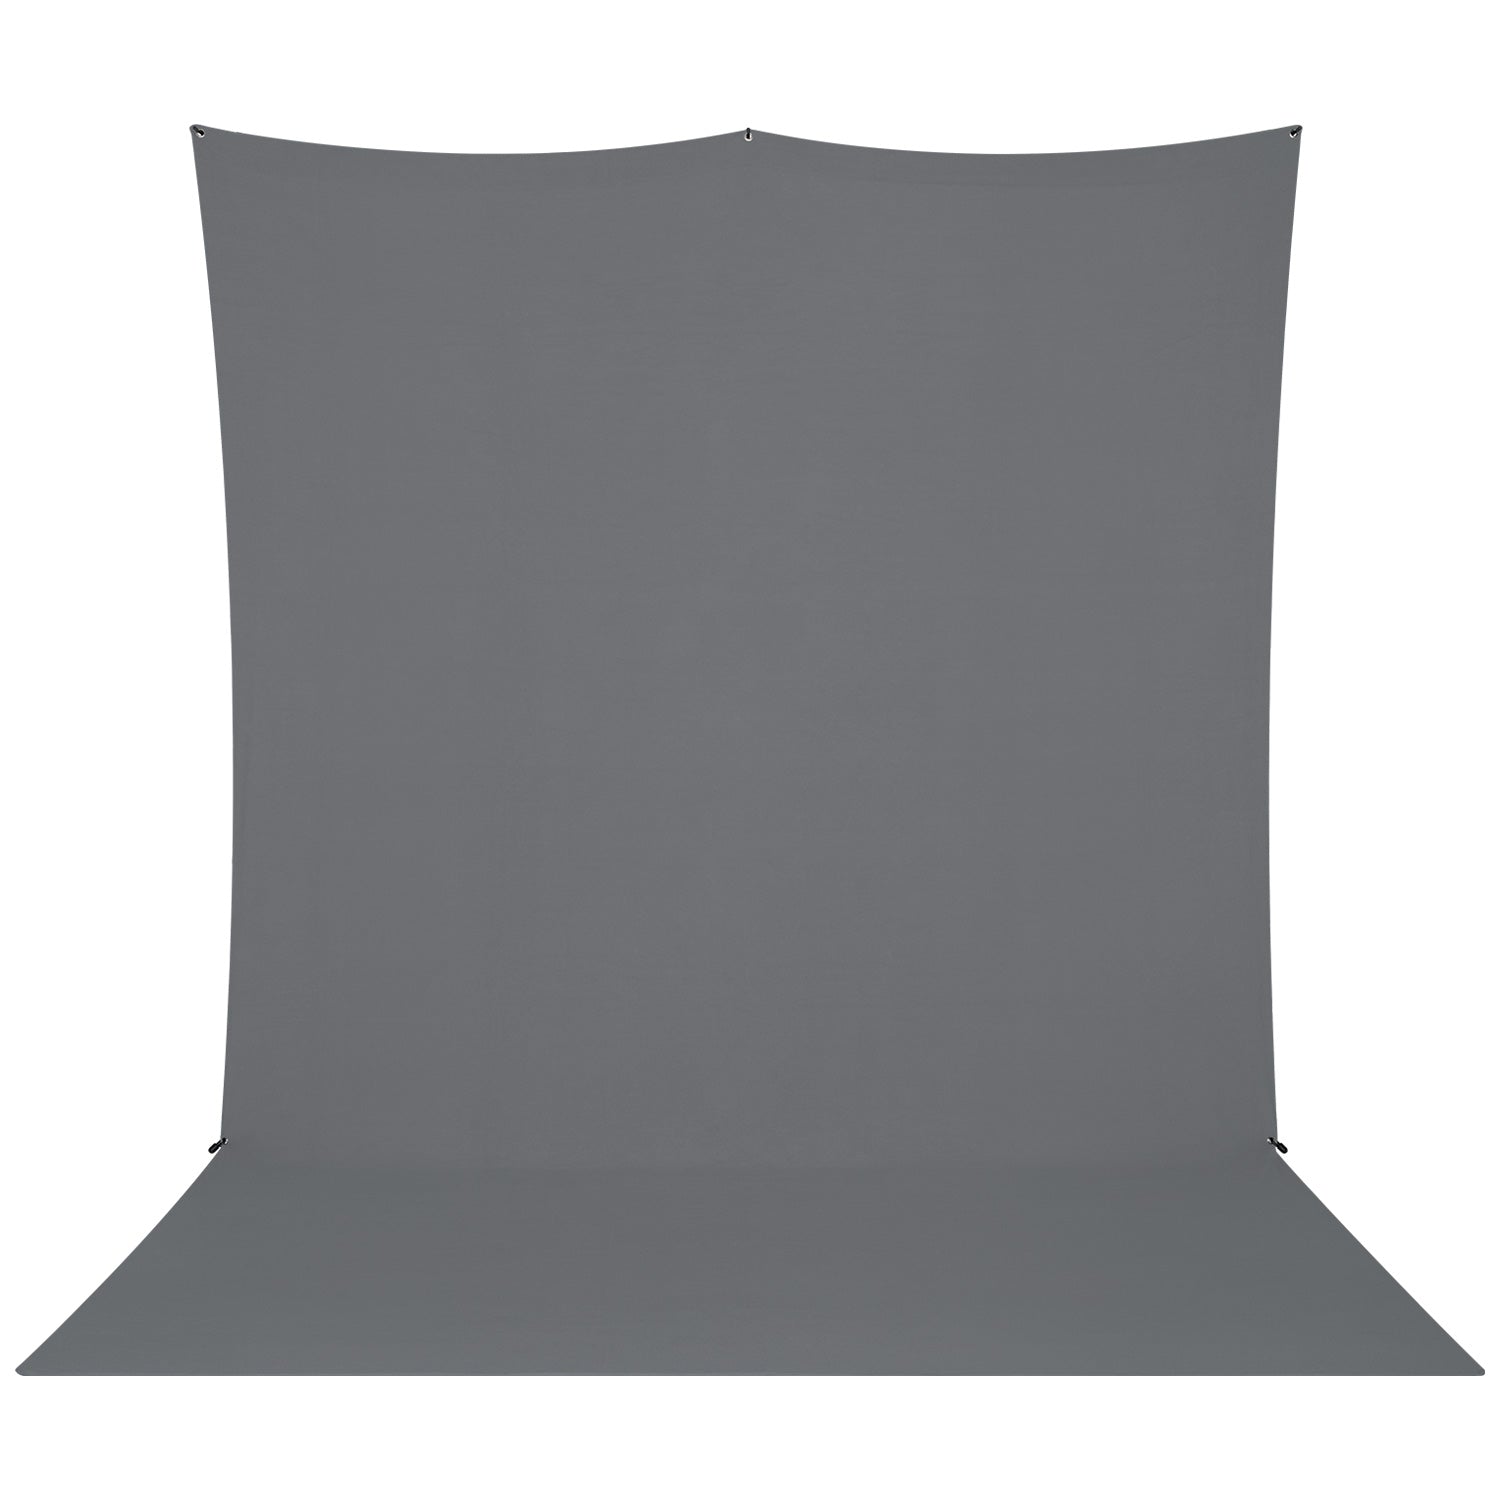 X-Drop Pro Wrinkle-Resistant Sweep Backdrop Kit - Neutral Gray (8' x 13')